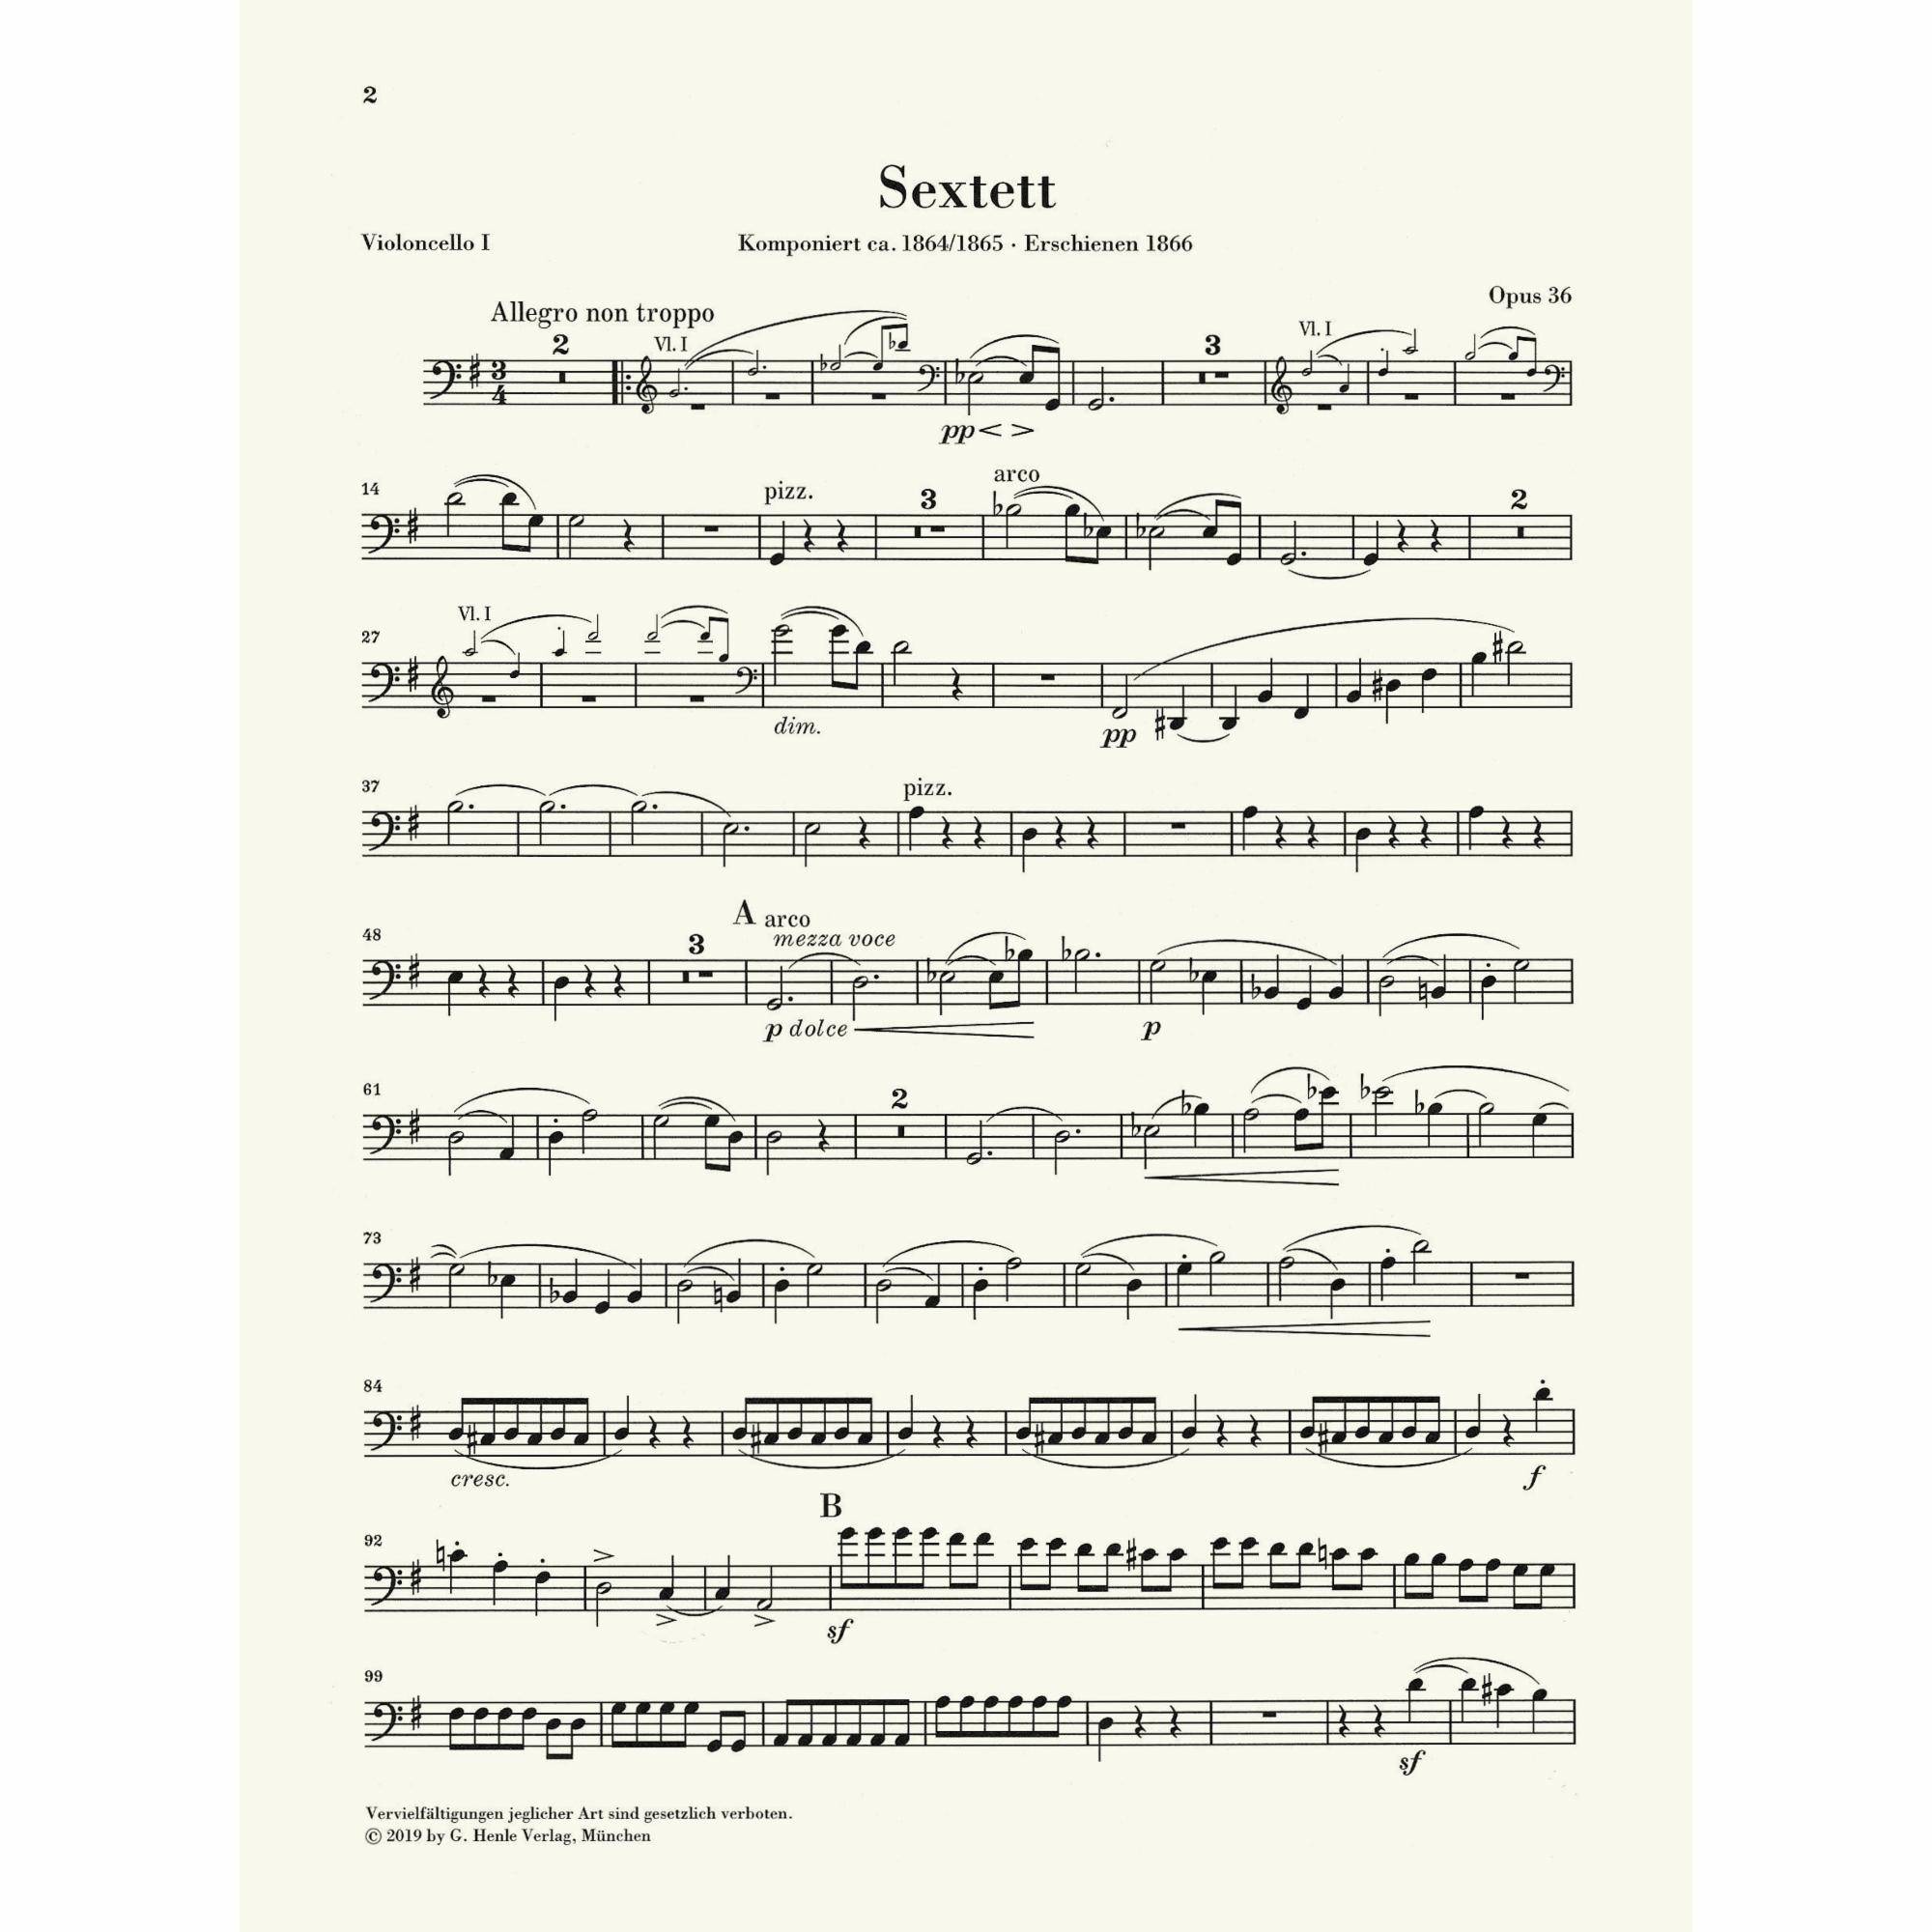 Sample: Cello I (Pg. 2)